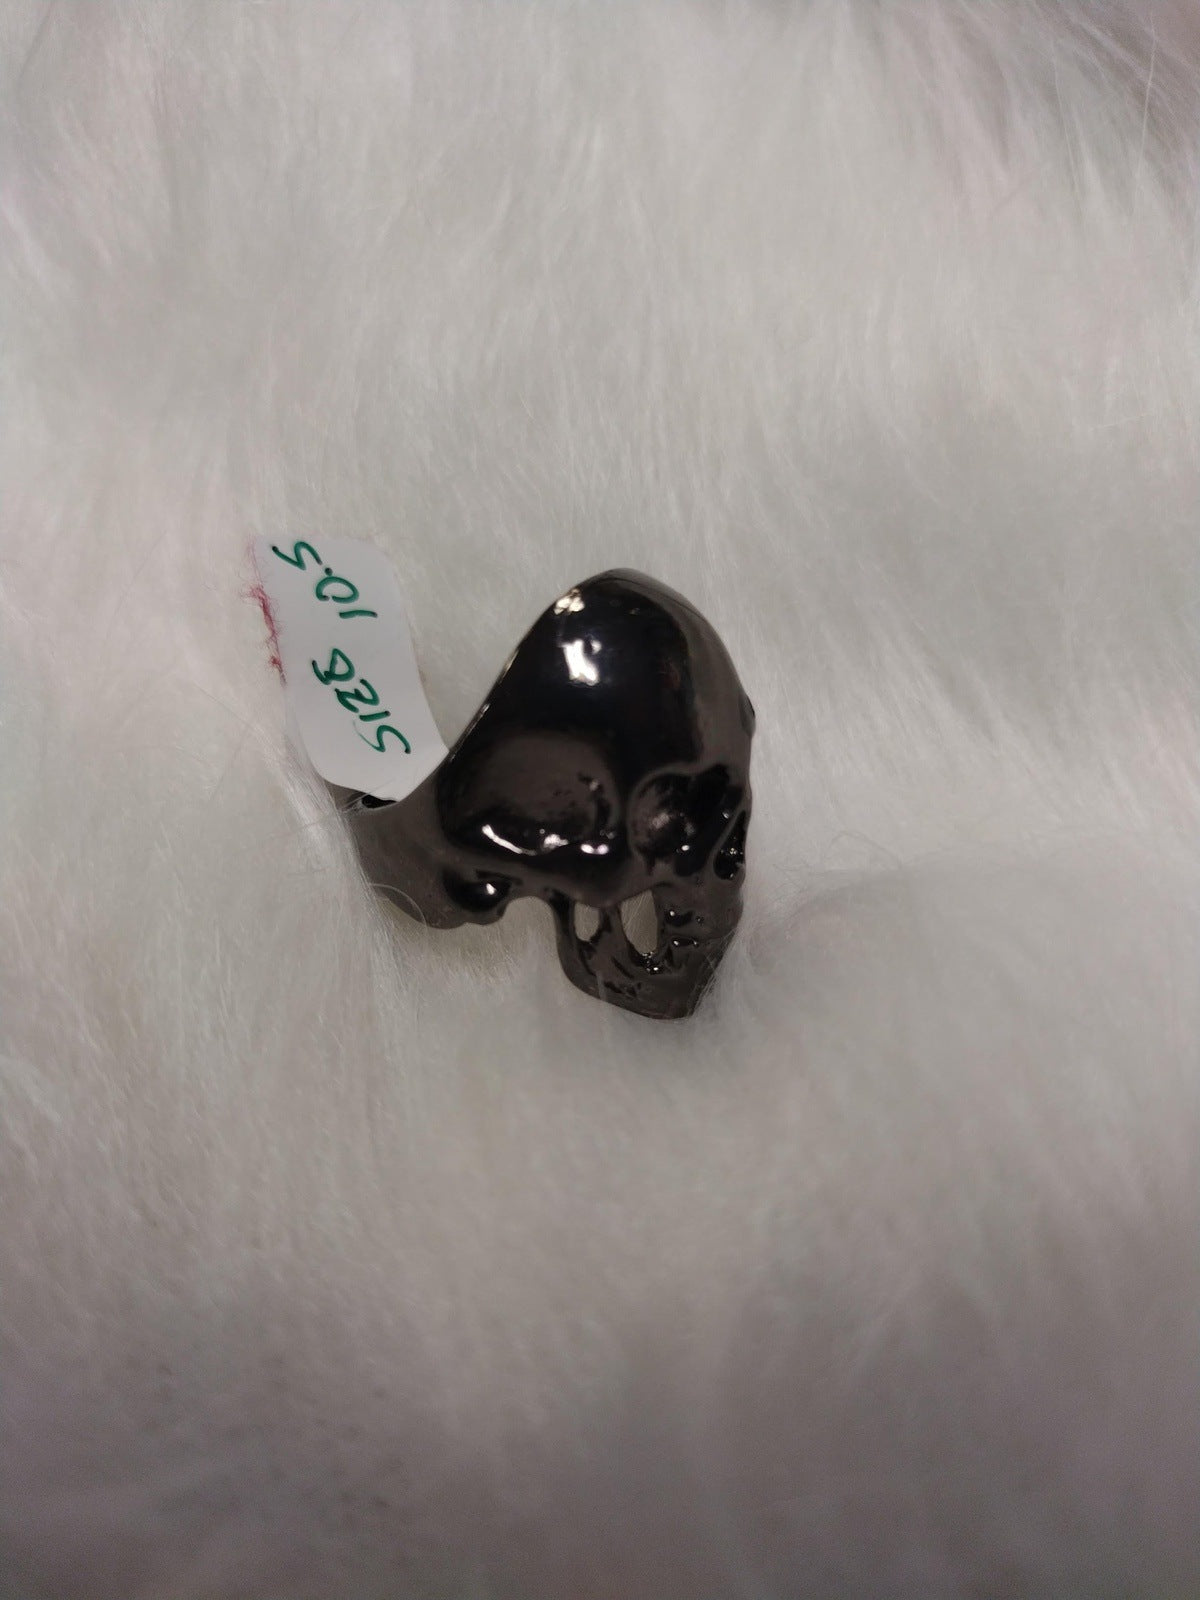 Size 10.5 Black Skull Ring